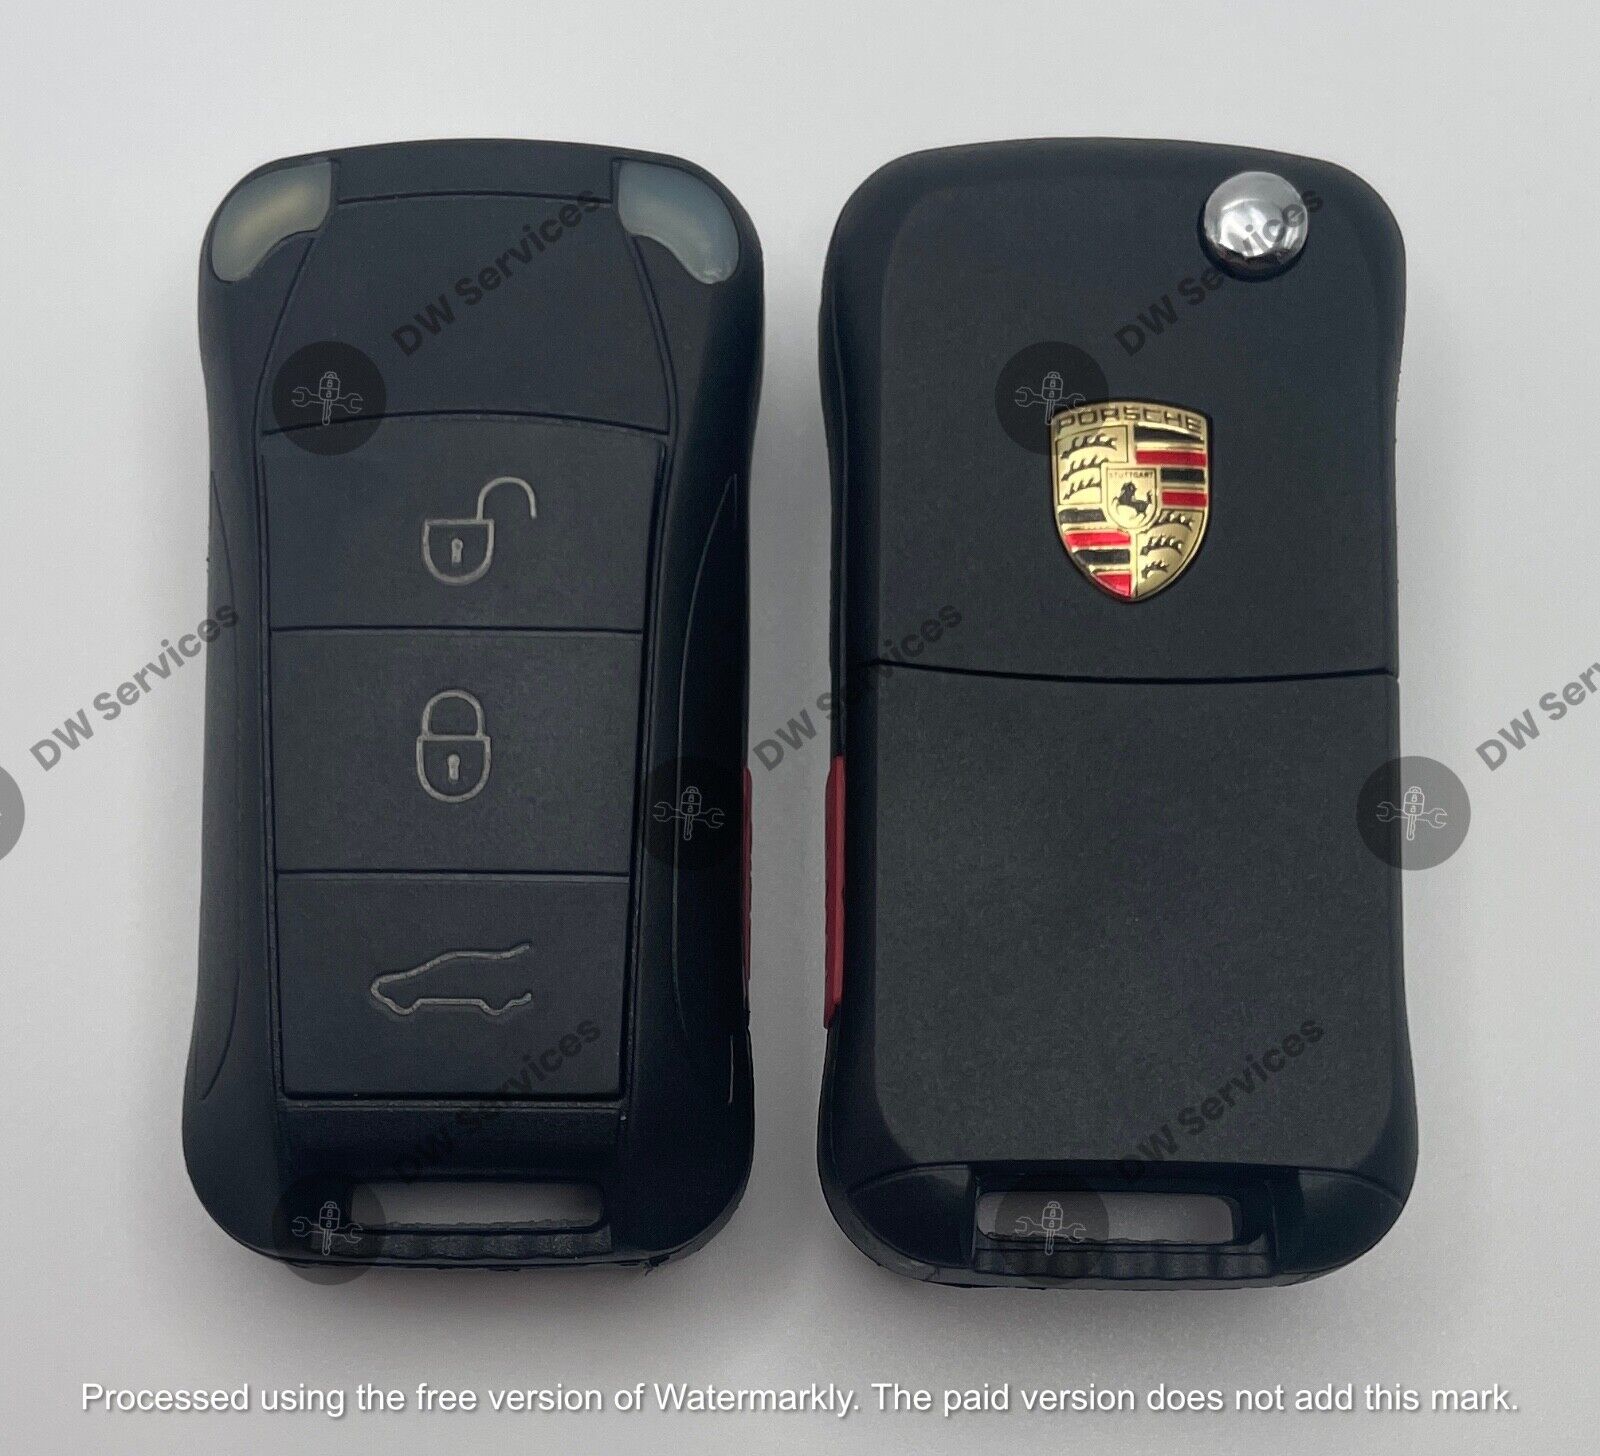 NEW Porsche Cayenne 2000 - 2011 Keyless entry remote key fob KR55WK45032